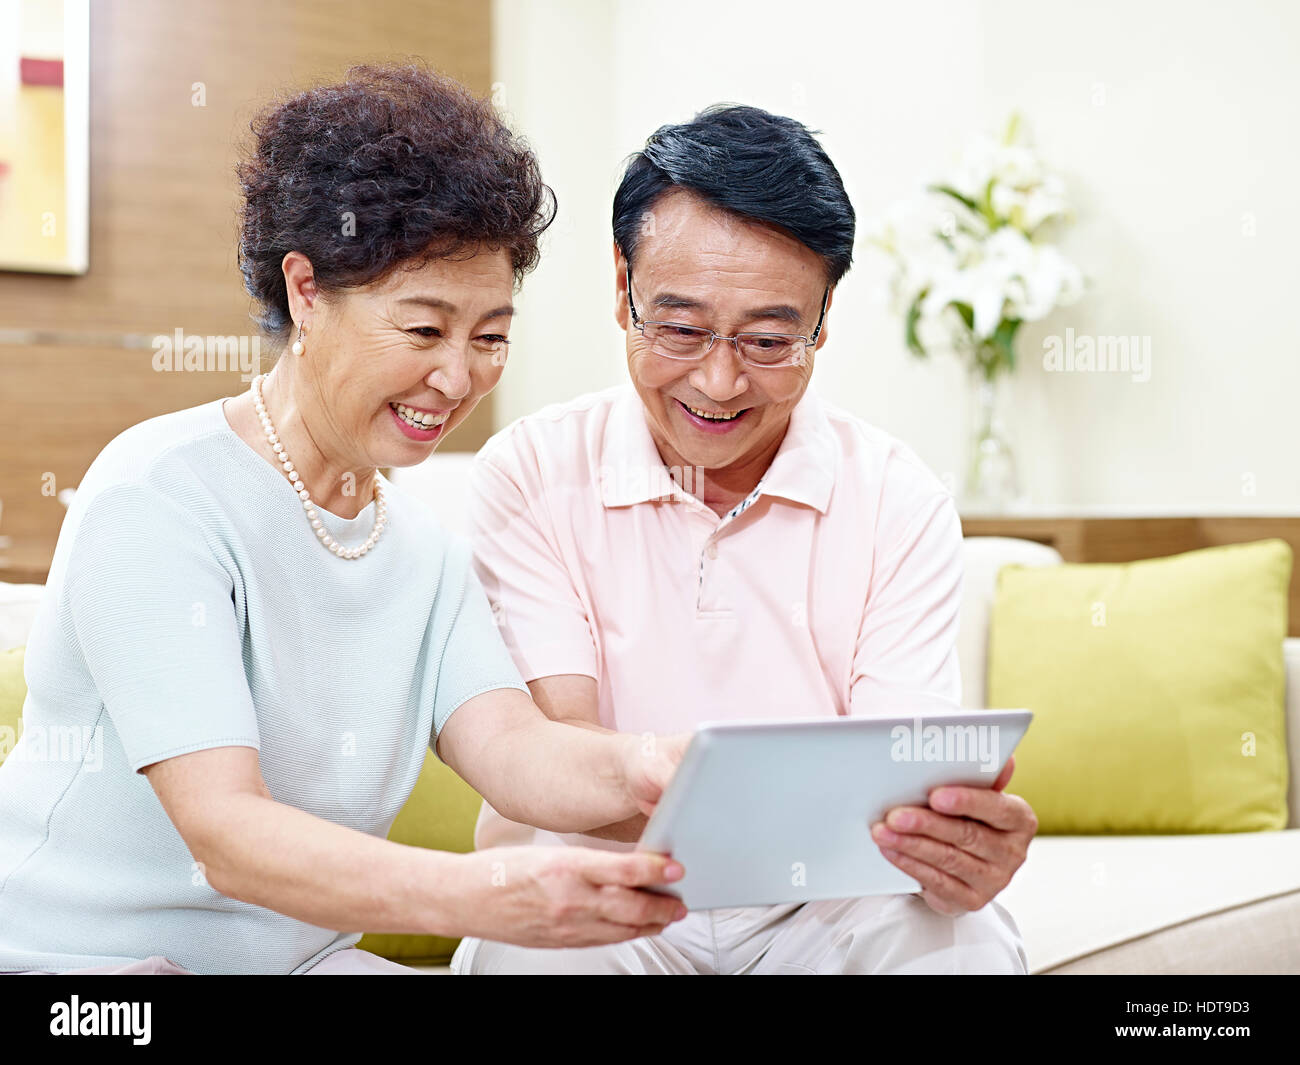 Senior asian giovane seduto sul divano guardando al computer tablet insieme, felice e sorridente Foto Stock